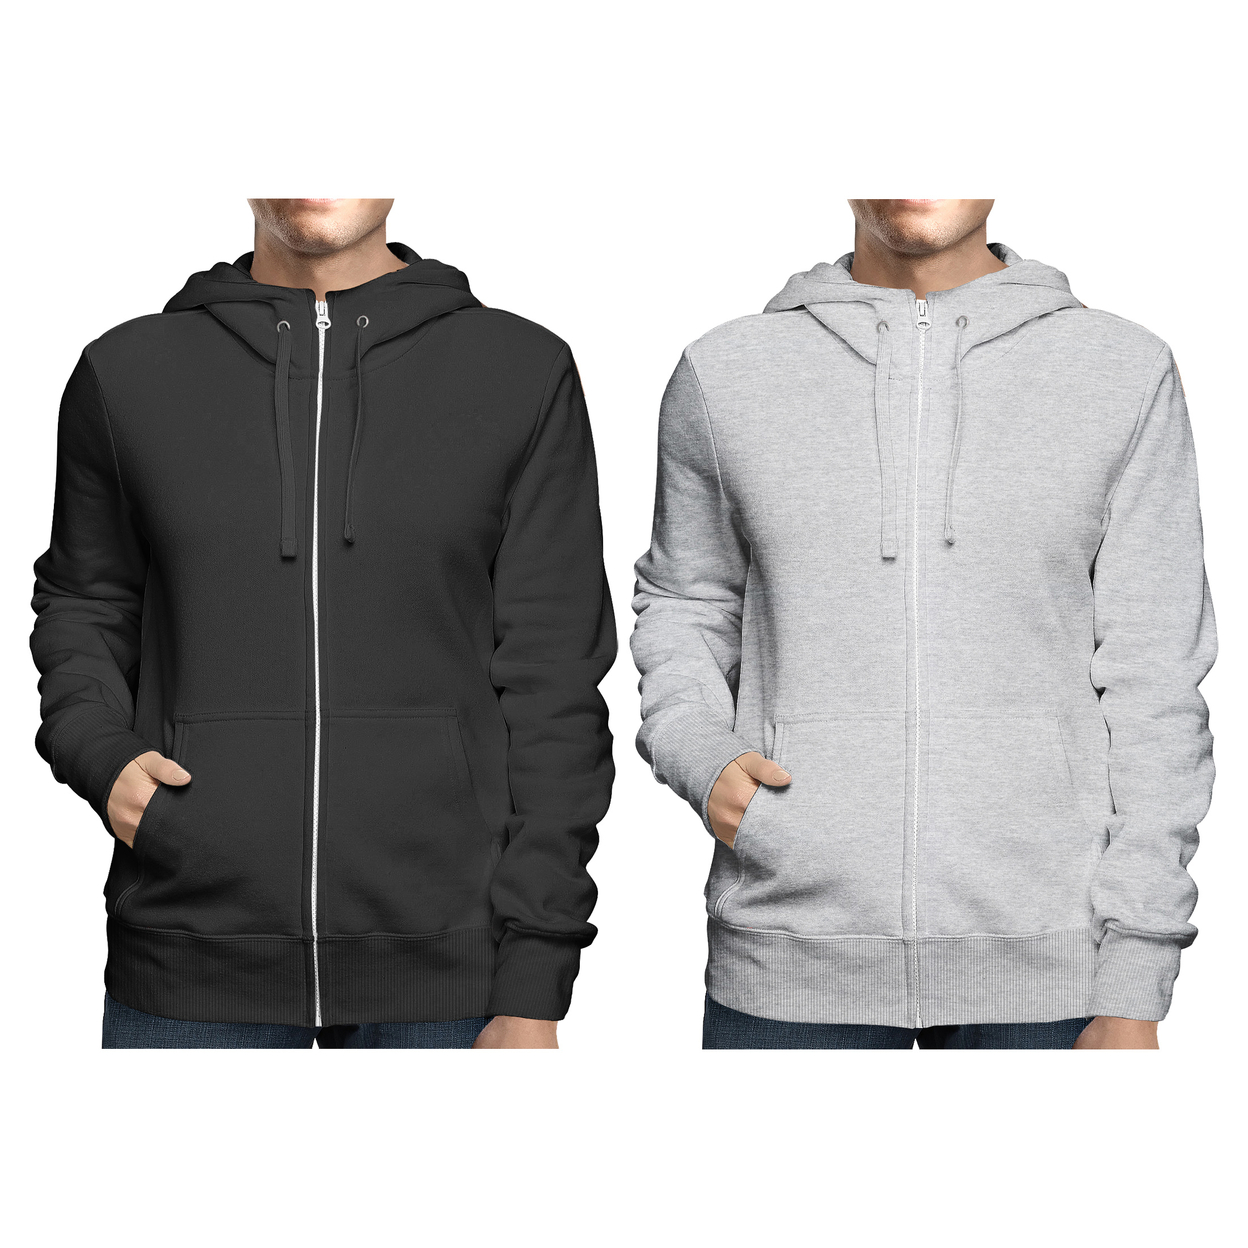 2-Pack: Men's Winter Warm Soft Full Zip-Up Fleece Lined Hoodie Sweatshirt - Black & Black, Large